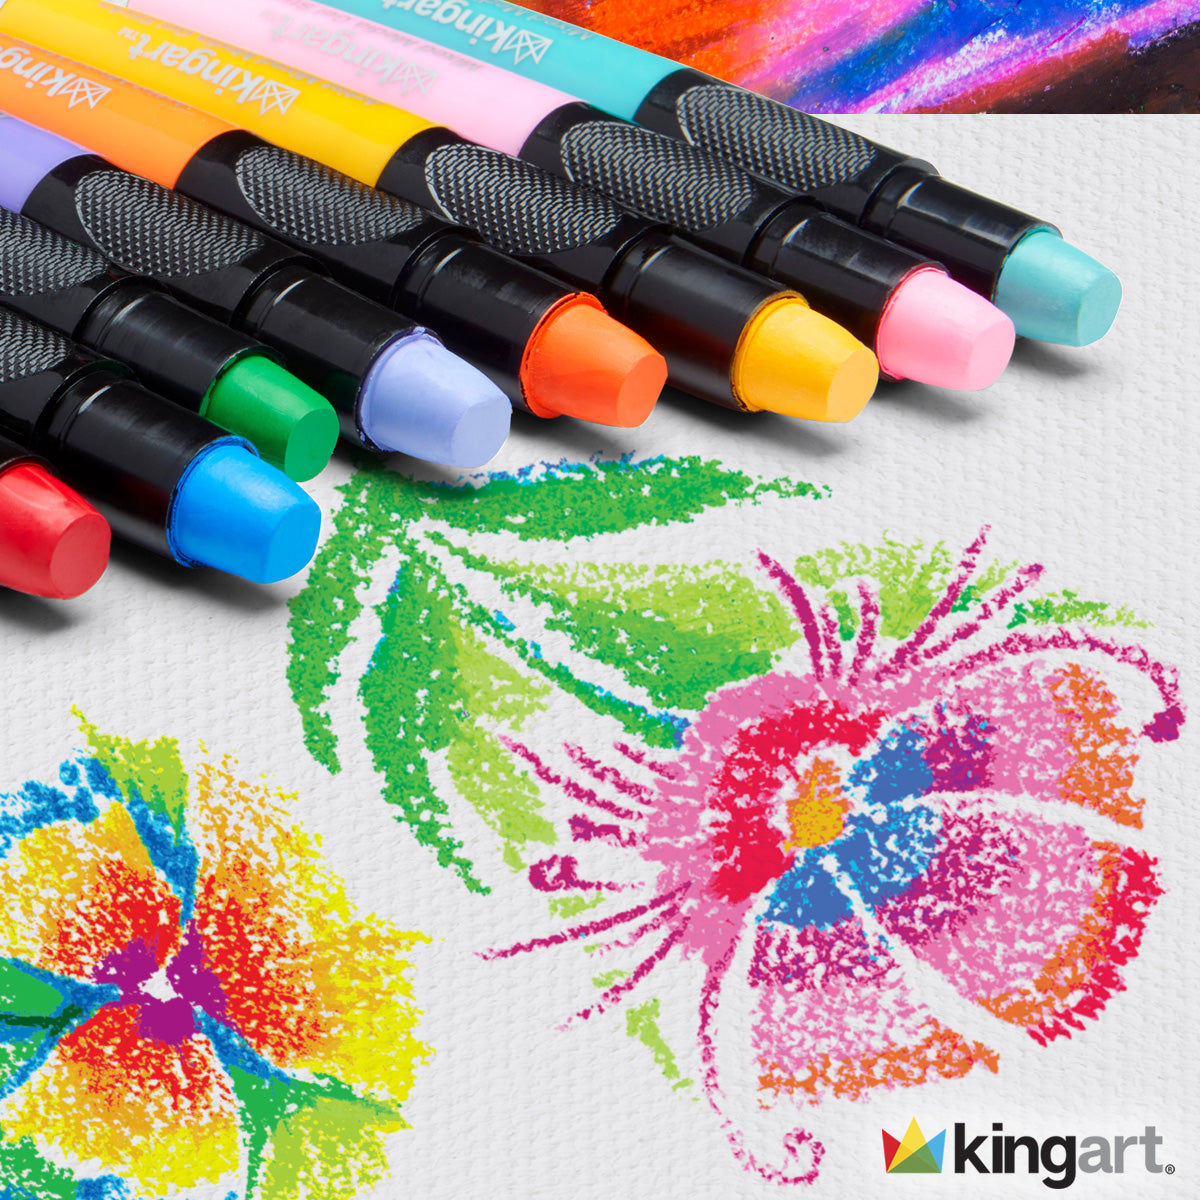 KingArt kingart gel stick artist mixed media crayons, set of 72 unique  colors